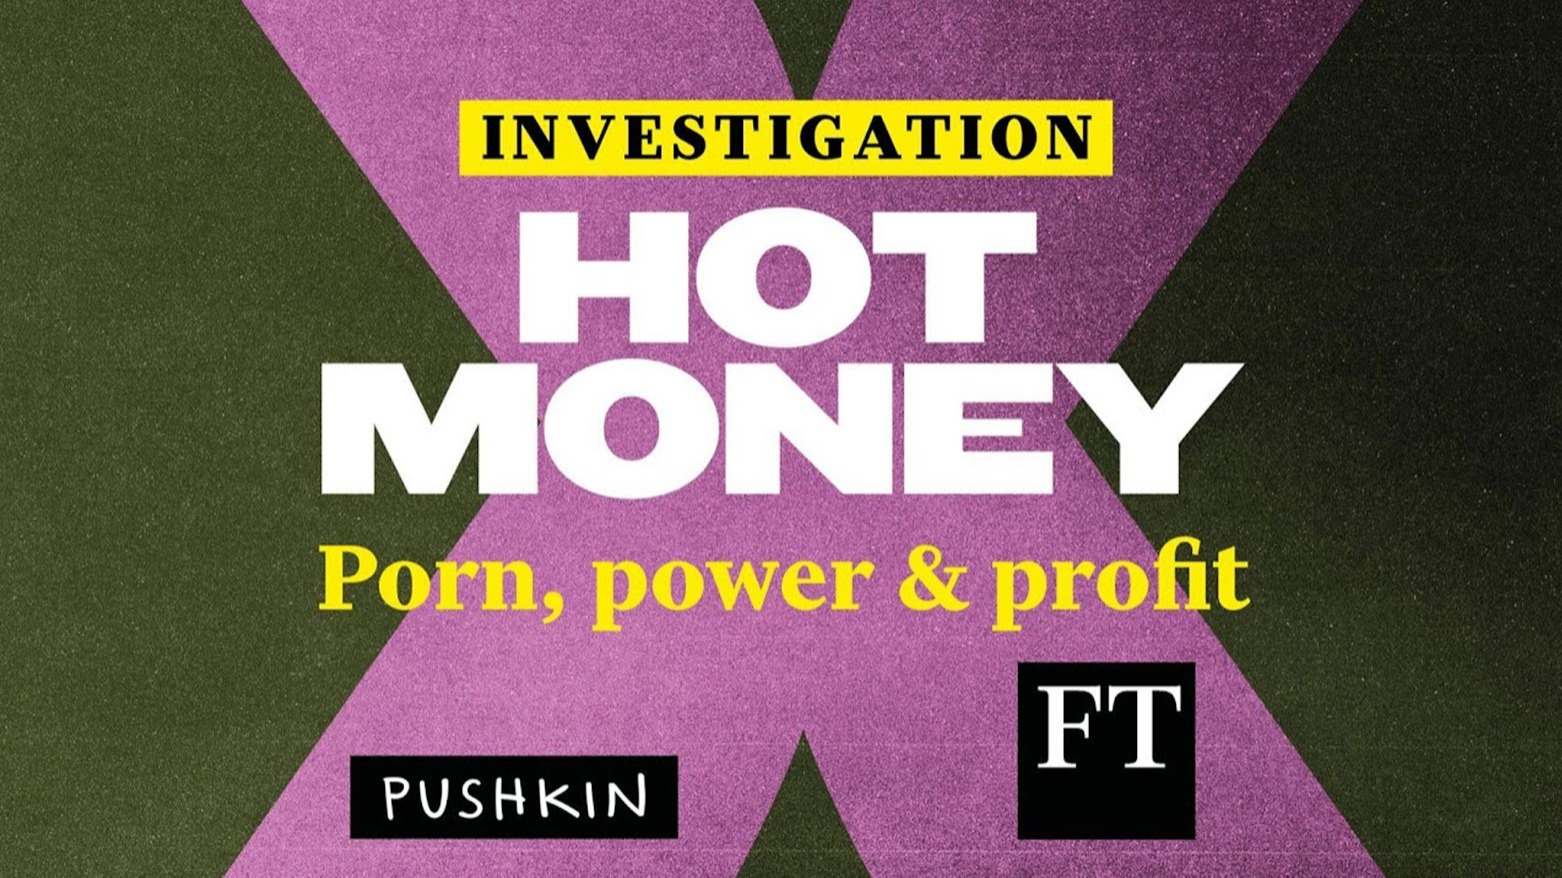 Jake Short Porn - Inside porn's star chamber | Financial Times